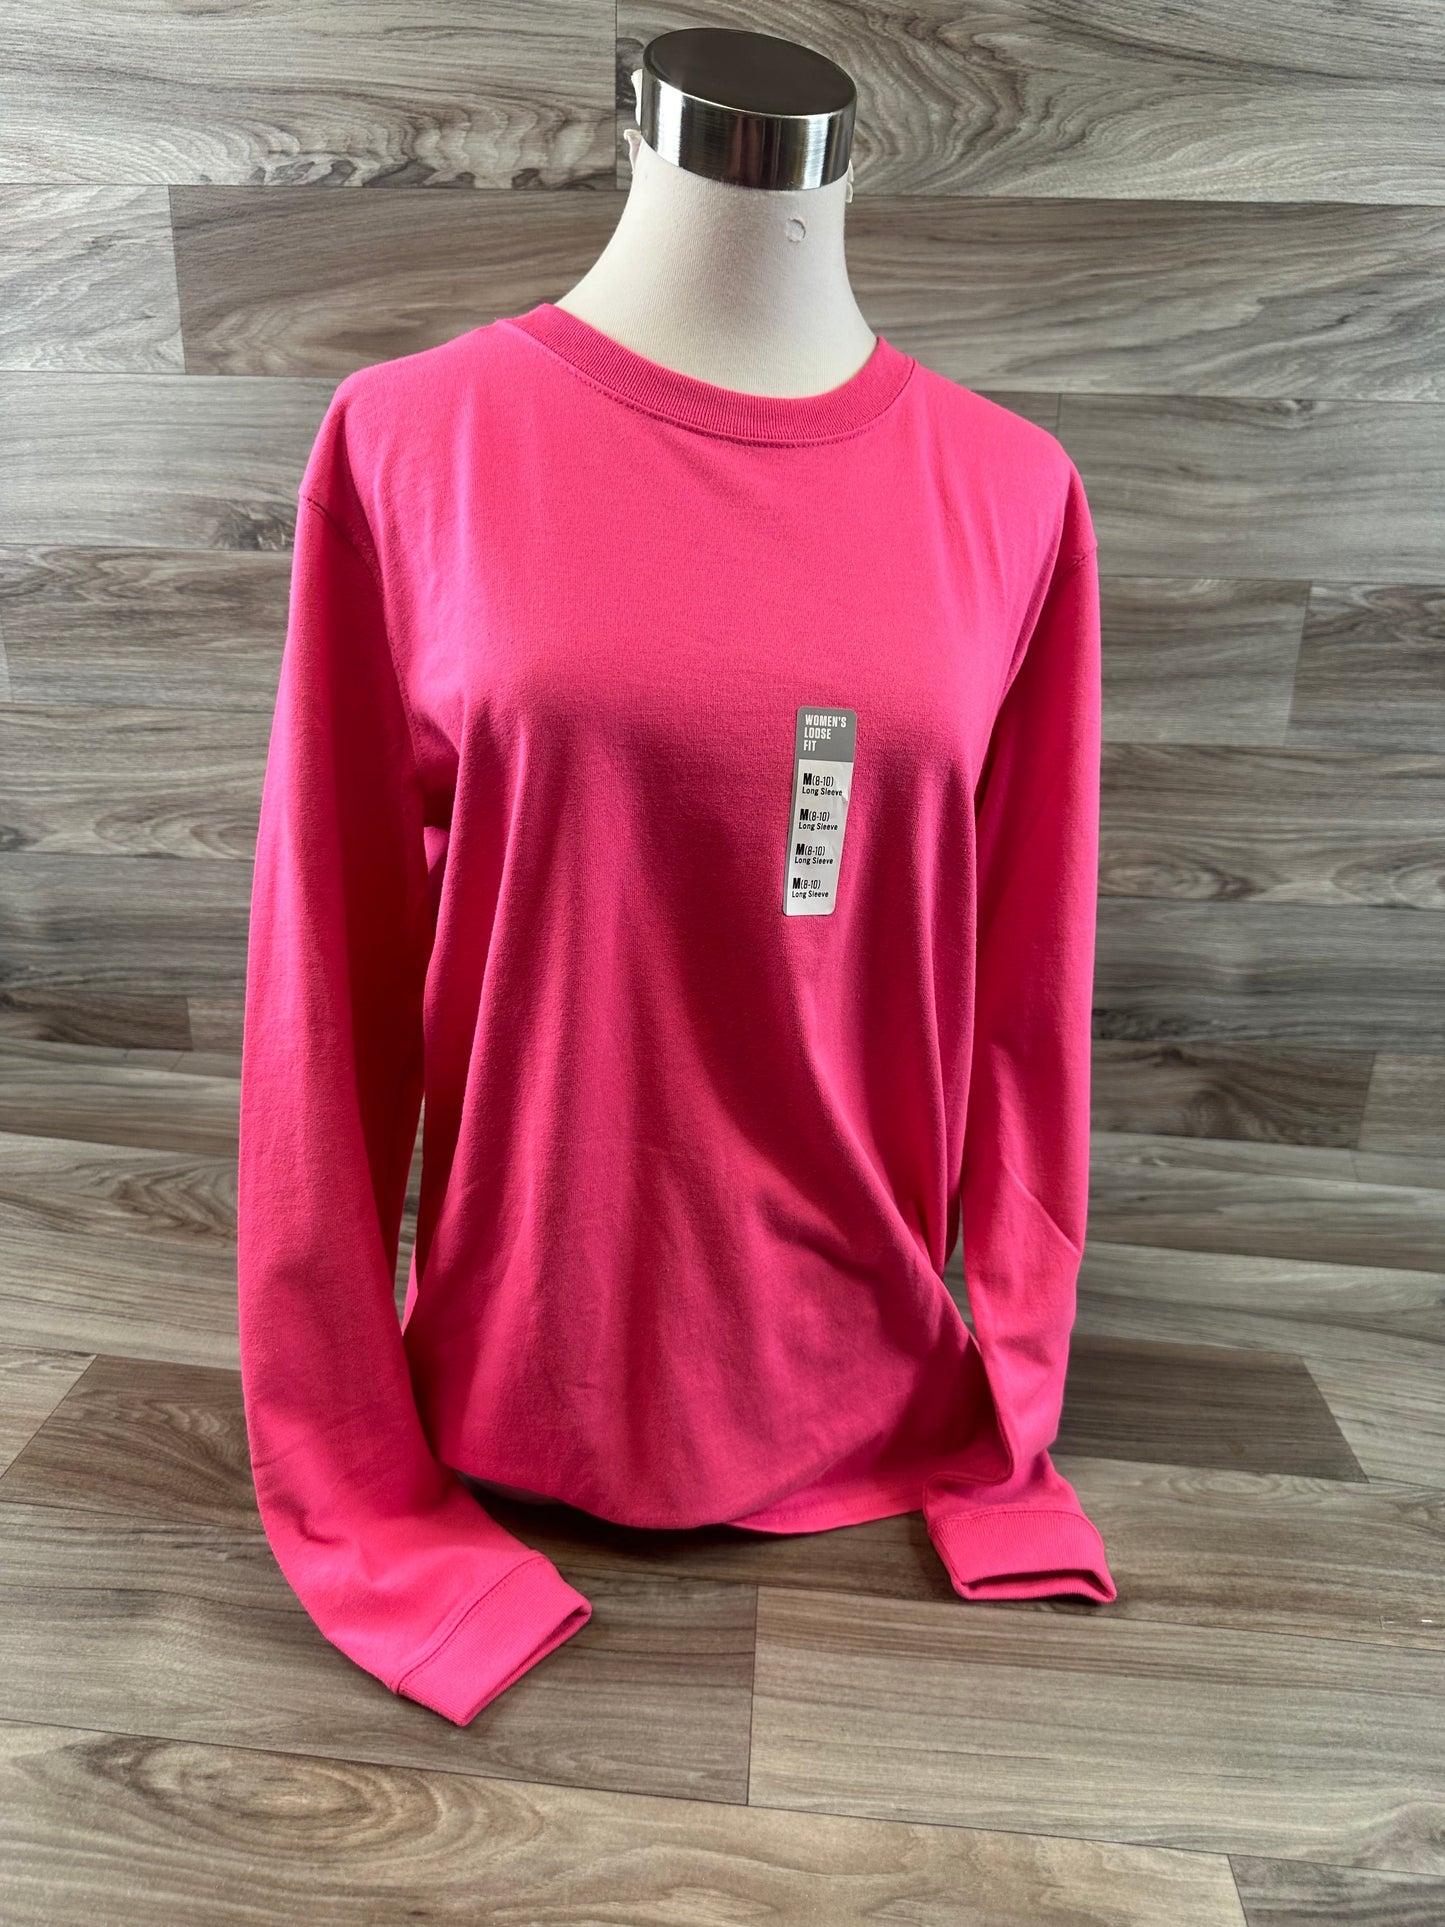 Pink Top Long Sleeve Carhartt, Size M